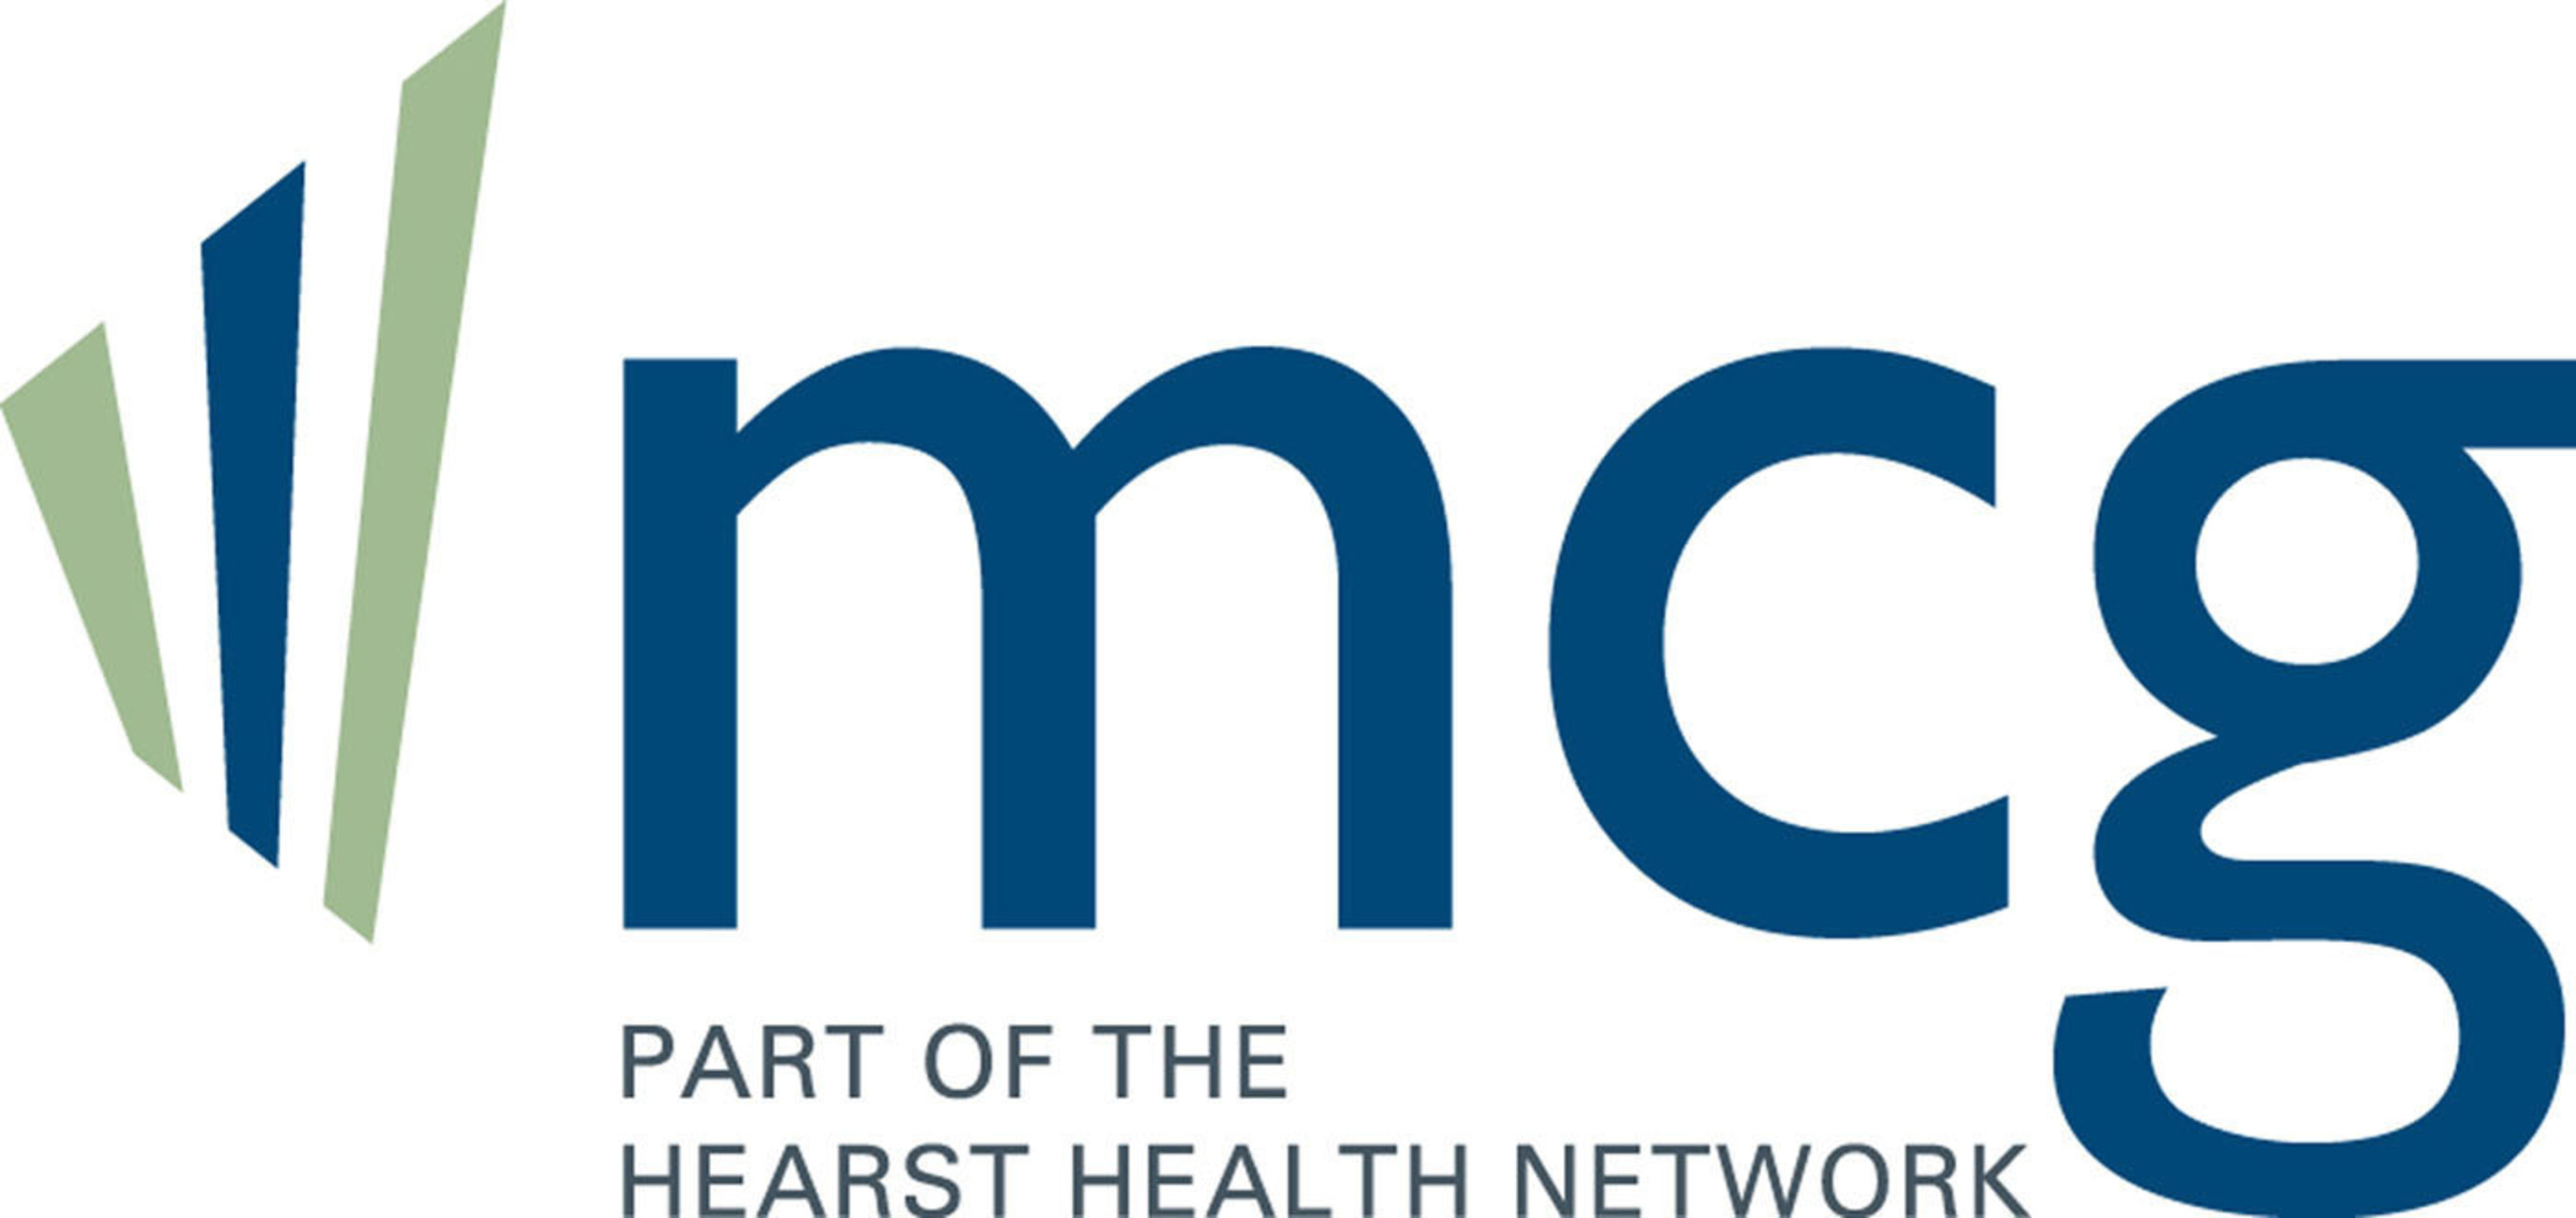 MCG, part of the Hearst Health network. (PRNewsFoto/MCG) (PRNewsFoto/MCG)